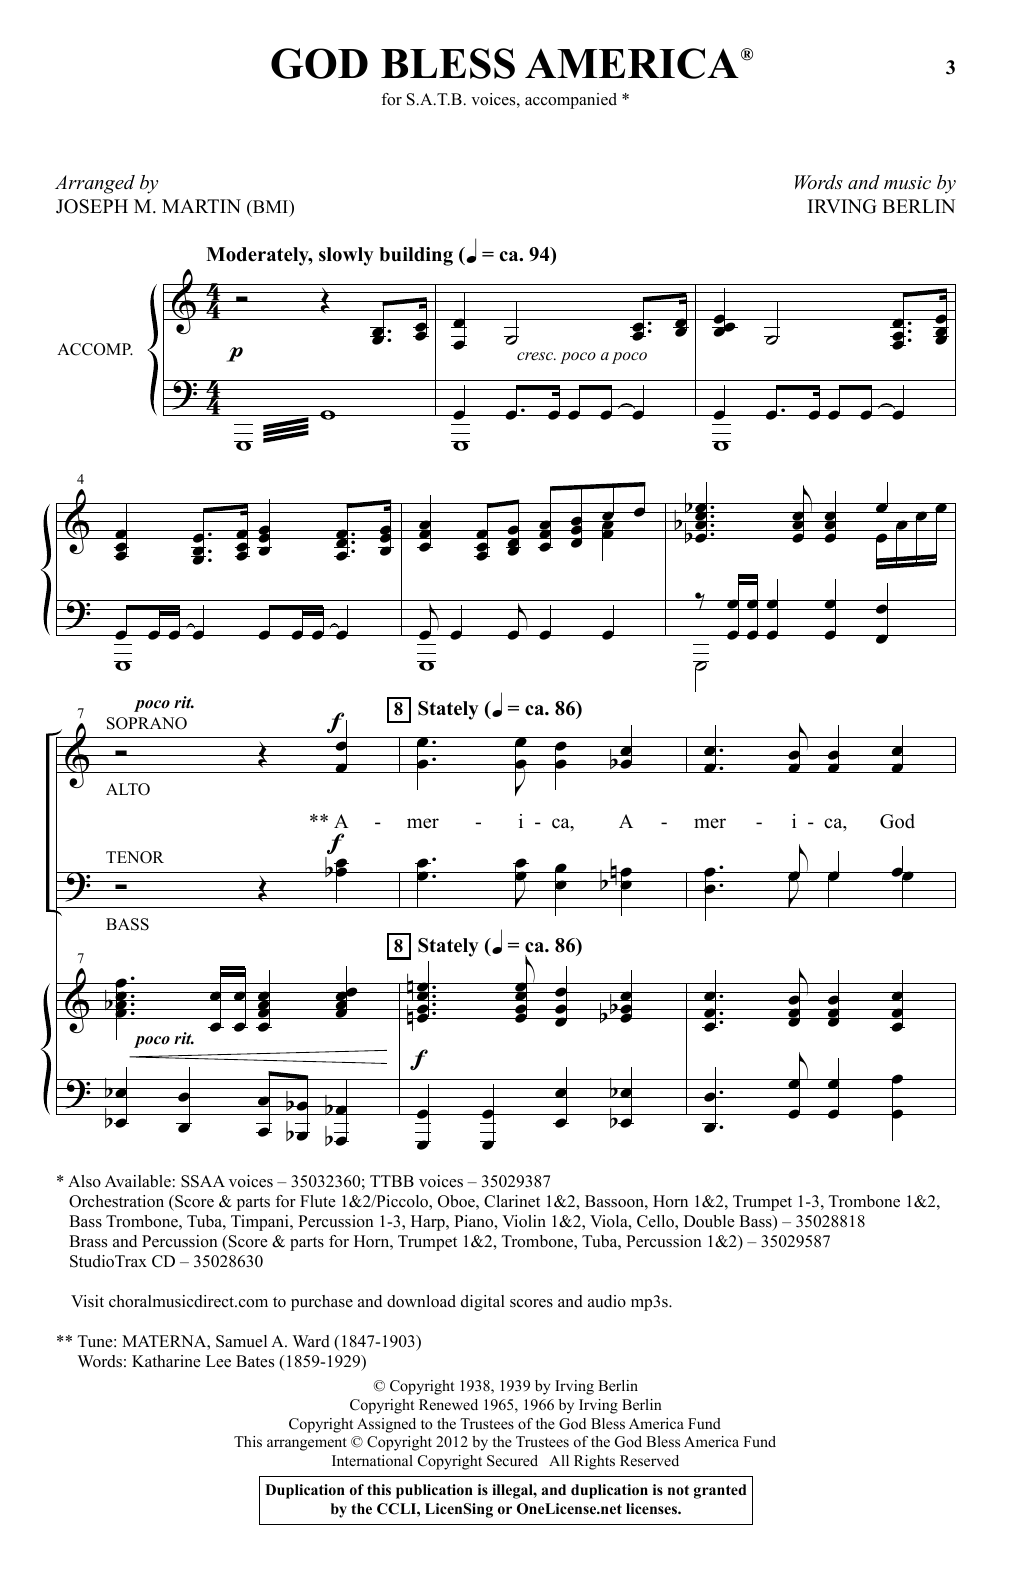 Irving Berlin God Bless America (arr. Joseph M. Martin) Sheet Music Notes & Chords for SSA Choir - Download or Print PDF